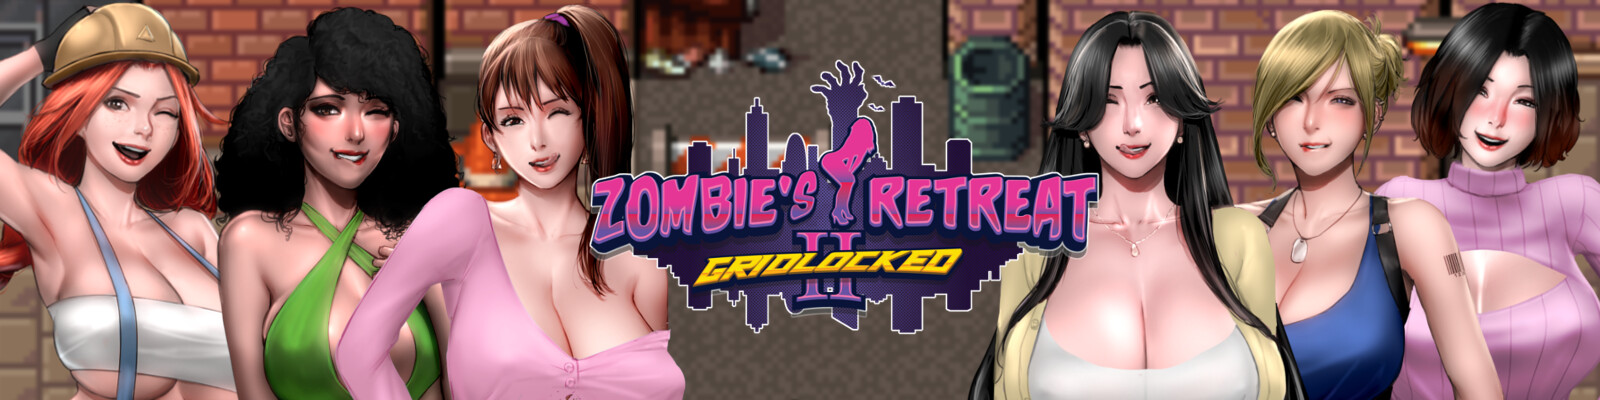 Zombie's Retreat 2: Gridlocked Main Image